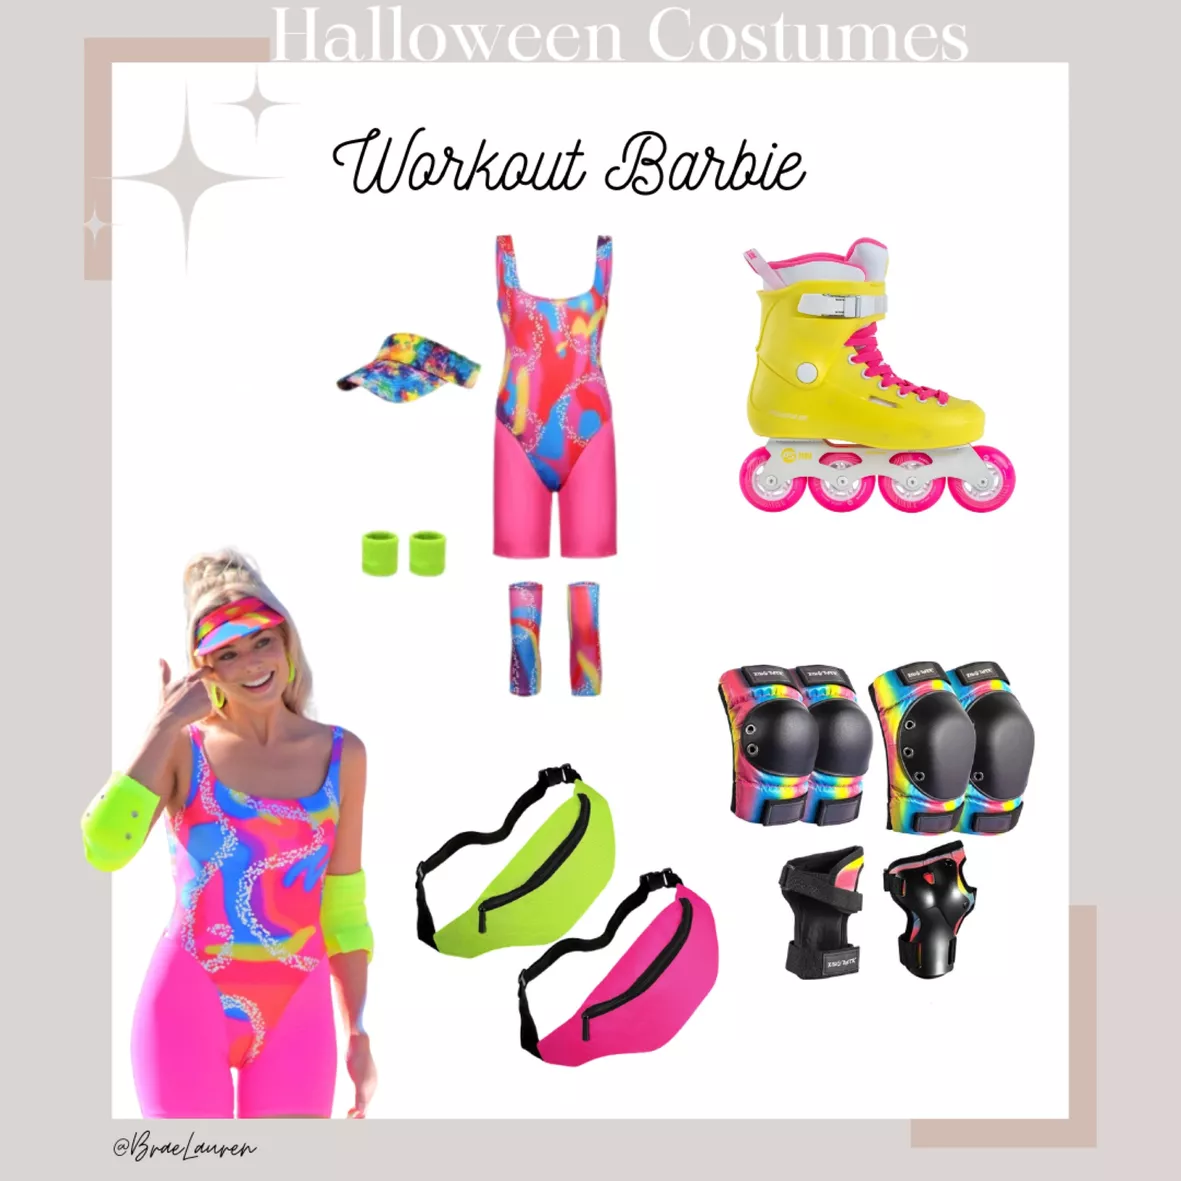 Workout Barbie costume  Barbie halloween costume, Barbie costume, Workout  barbie